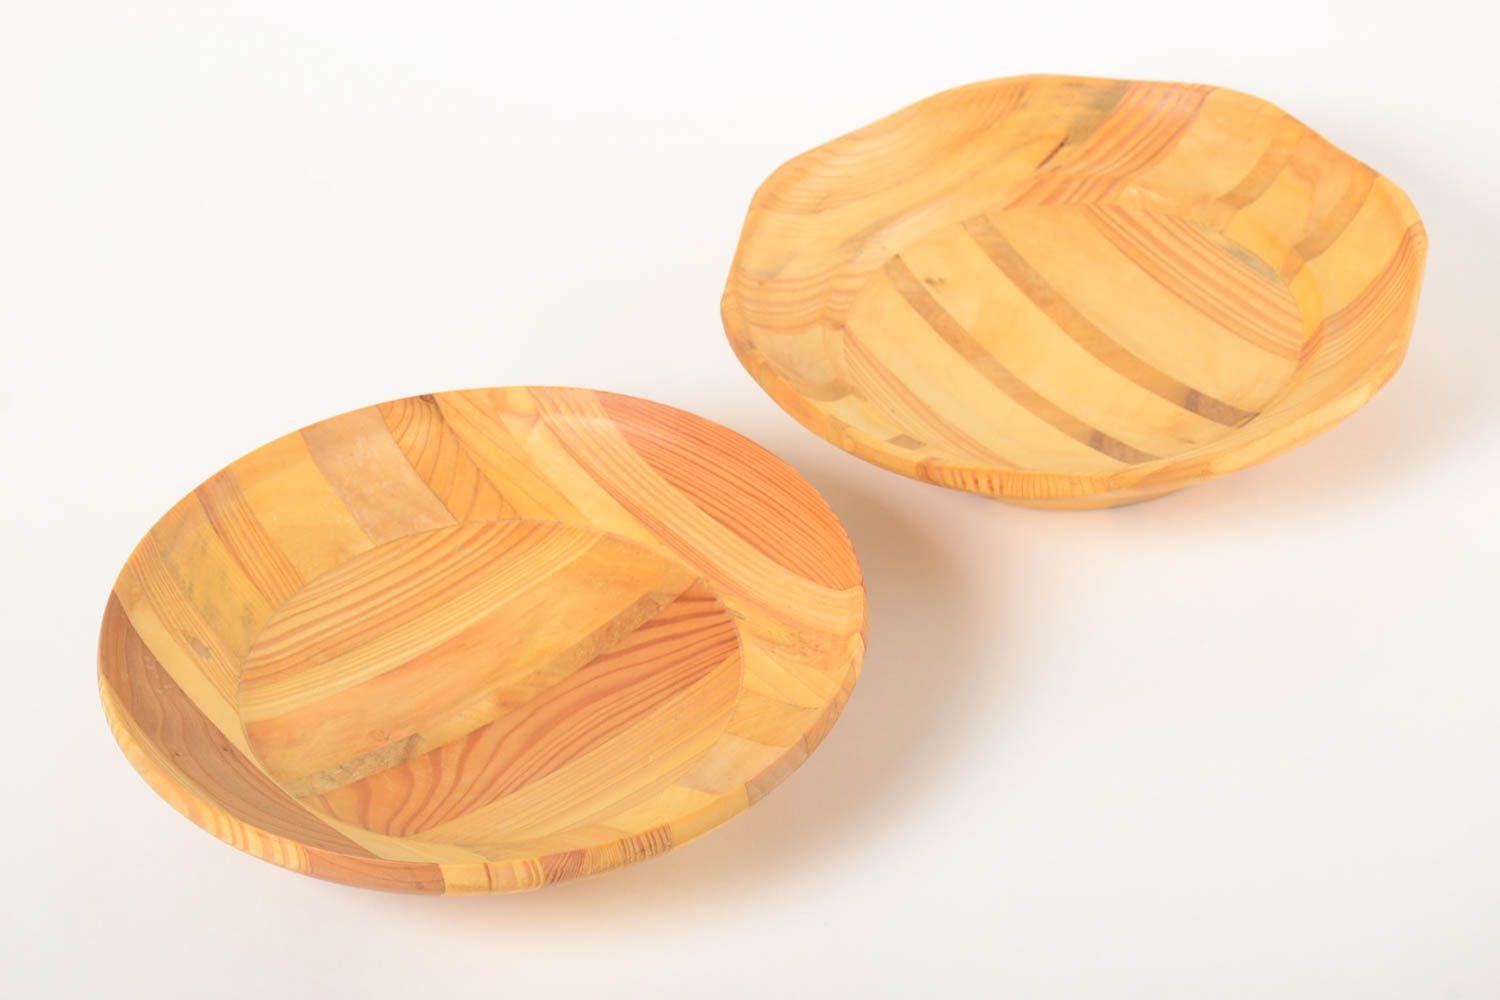 Handmade Teller Set Geschirr aus Holz Holzteller rund 2 Stück Geschenk Idee foto 2